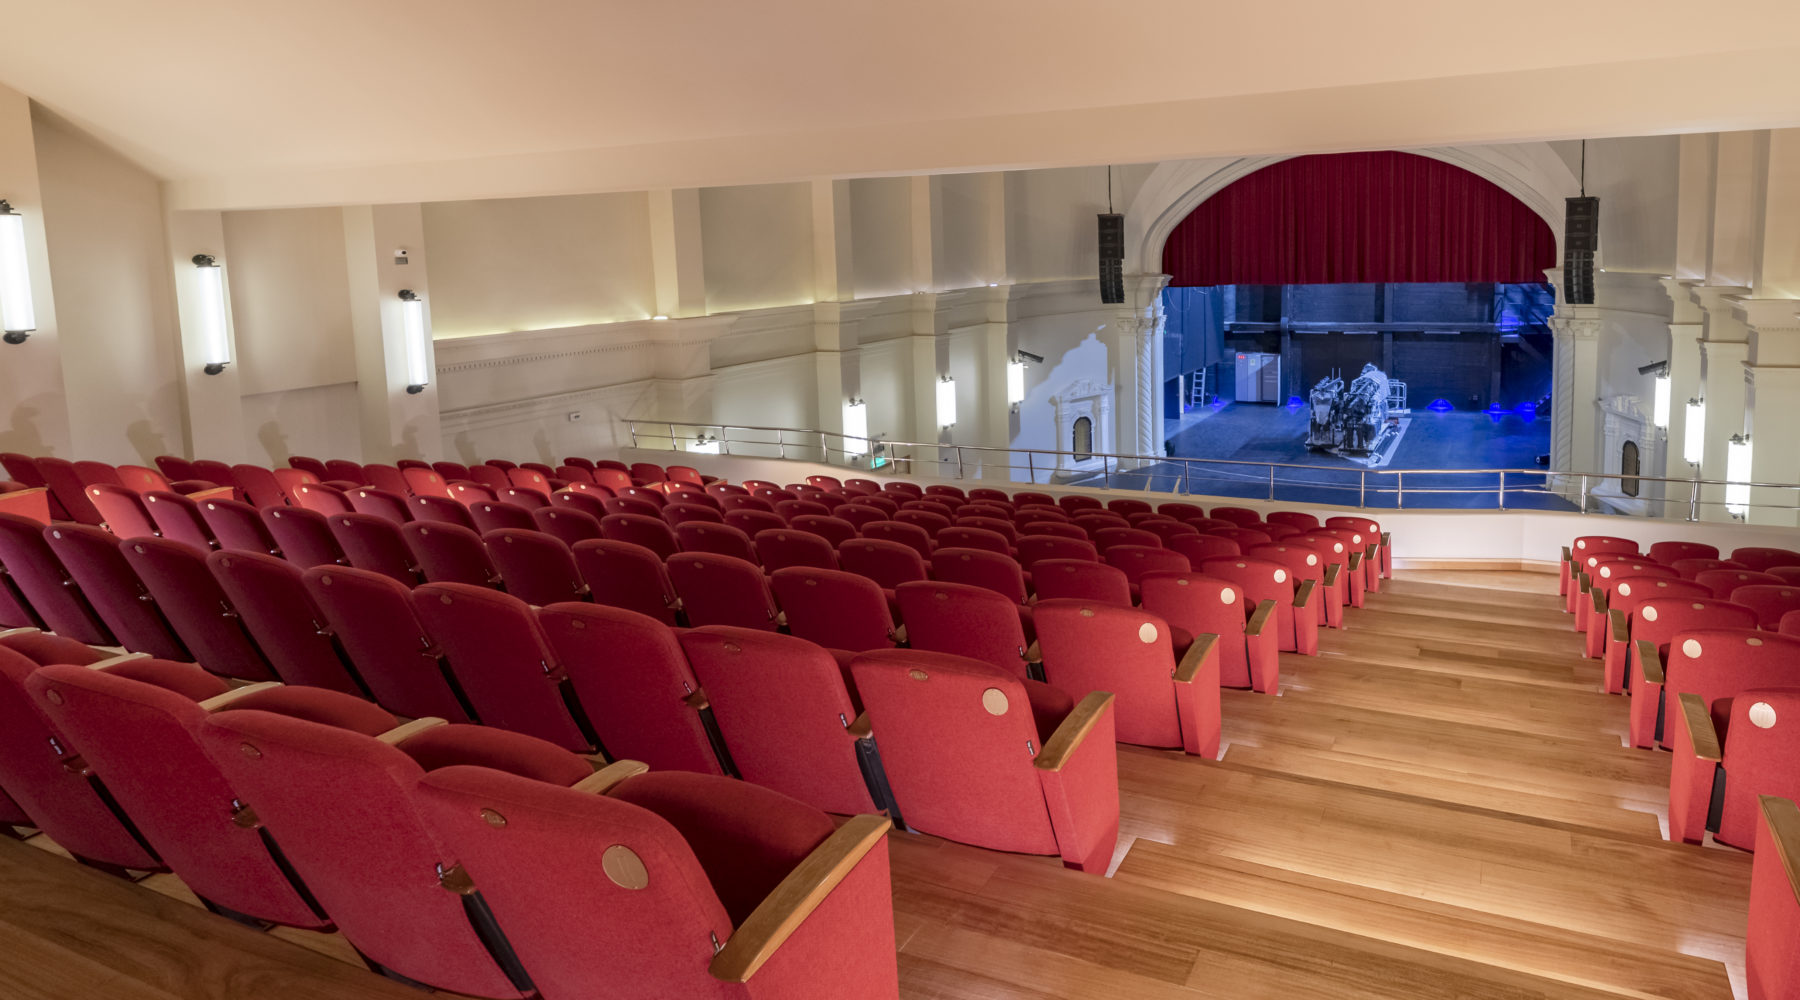 Teatro Regional Cervantes: una historia para recordar